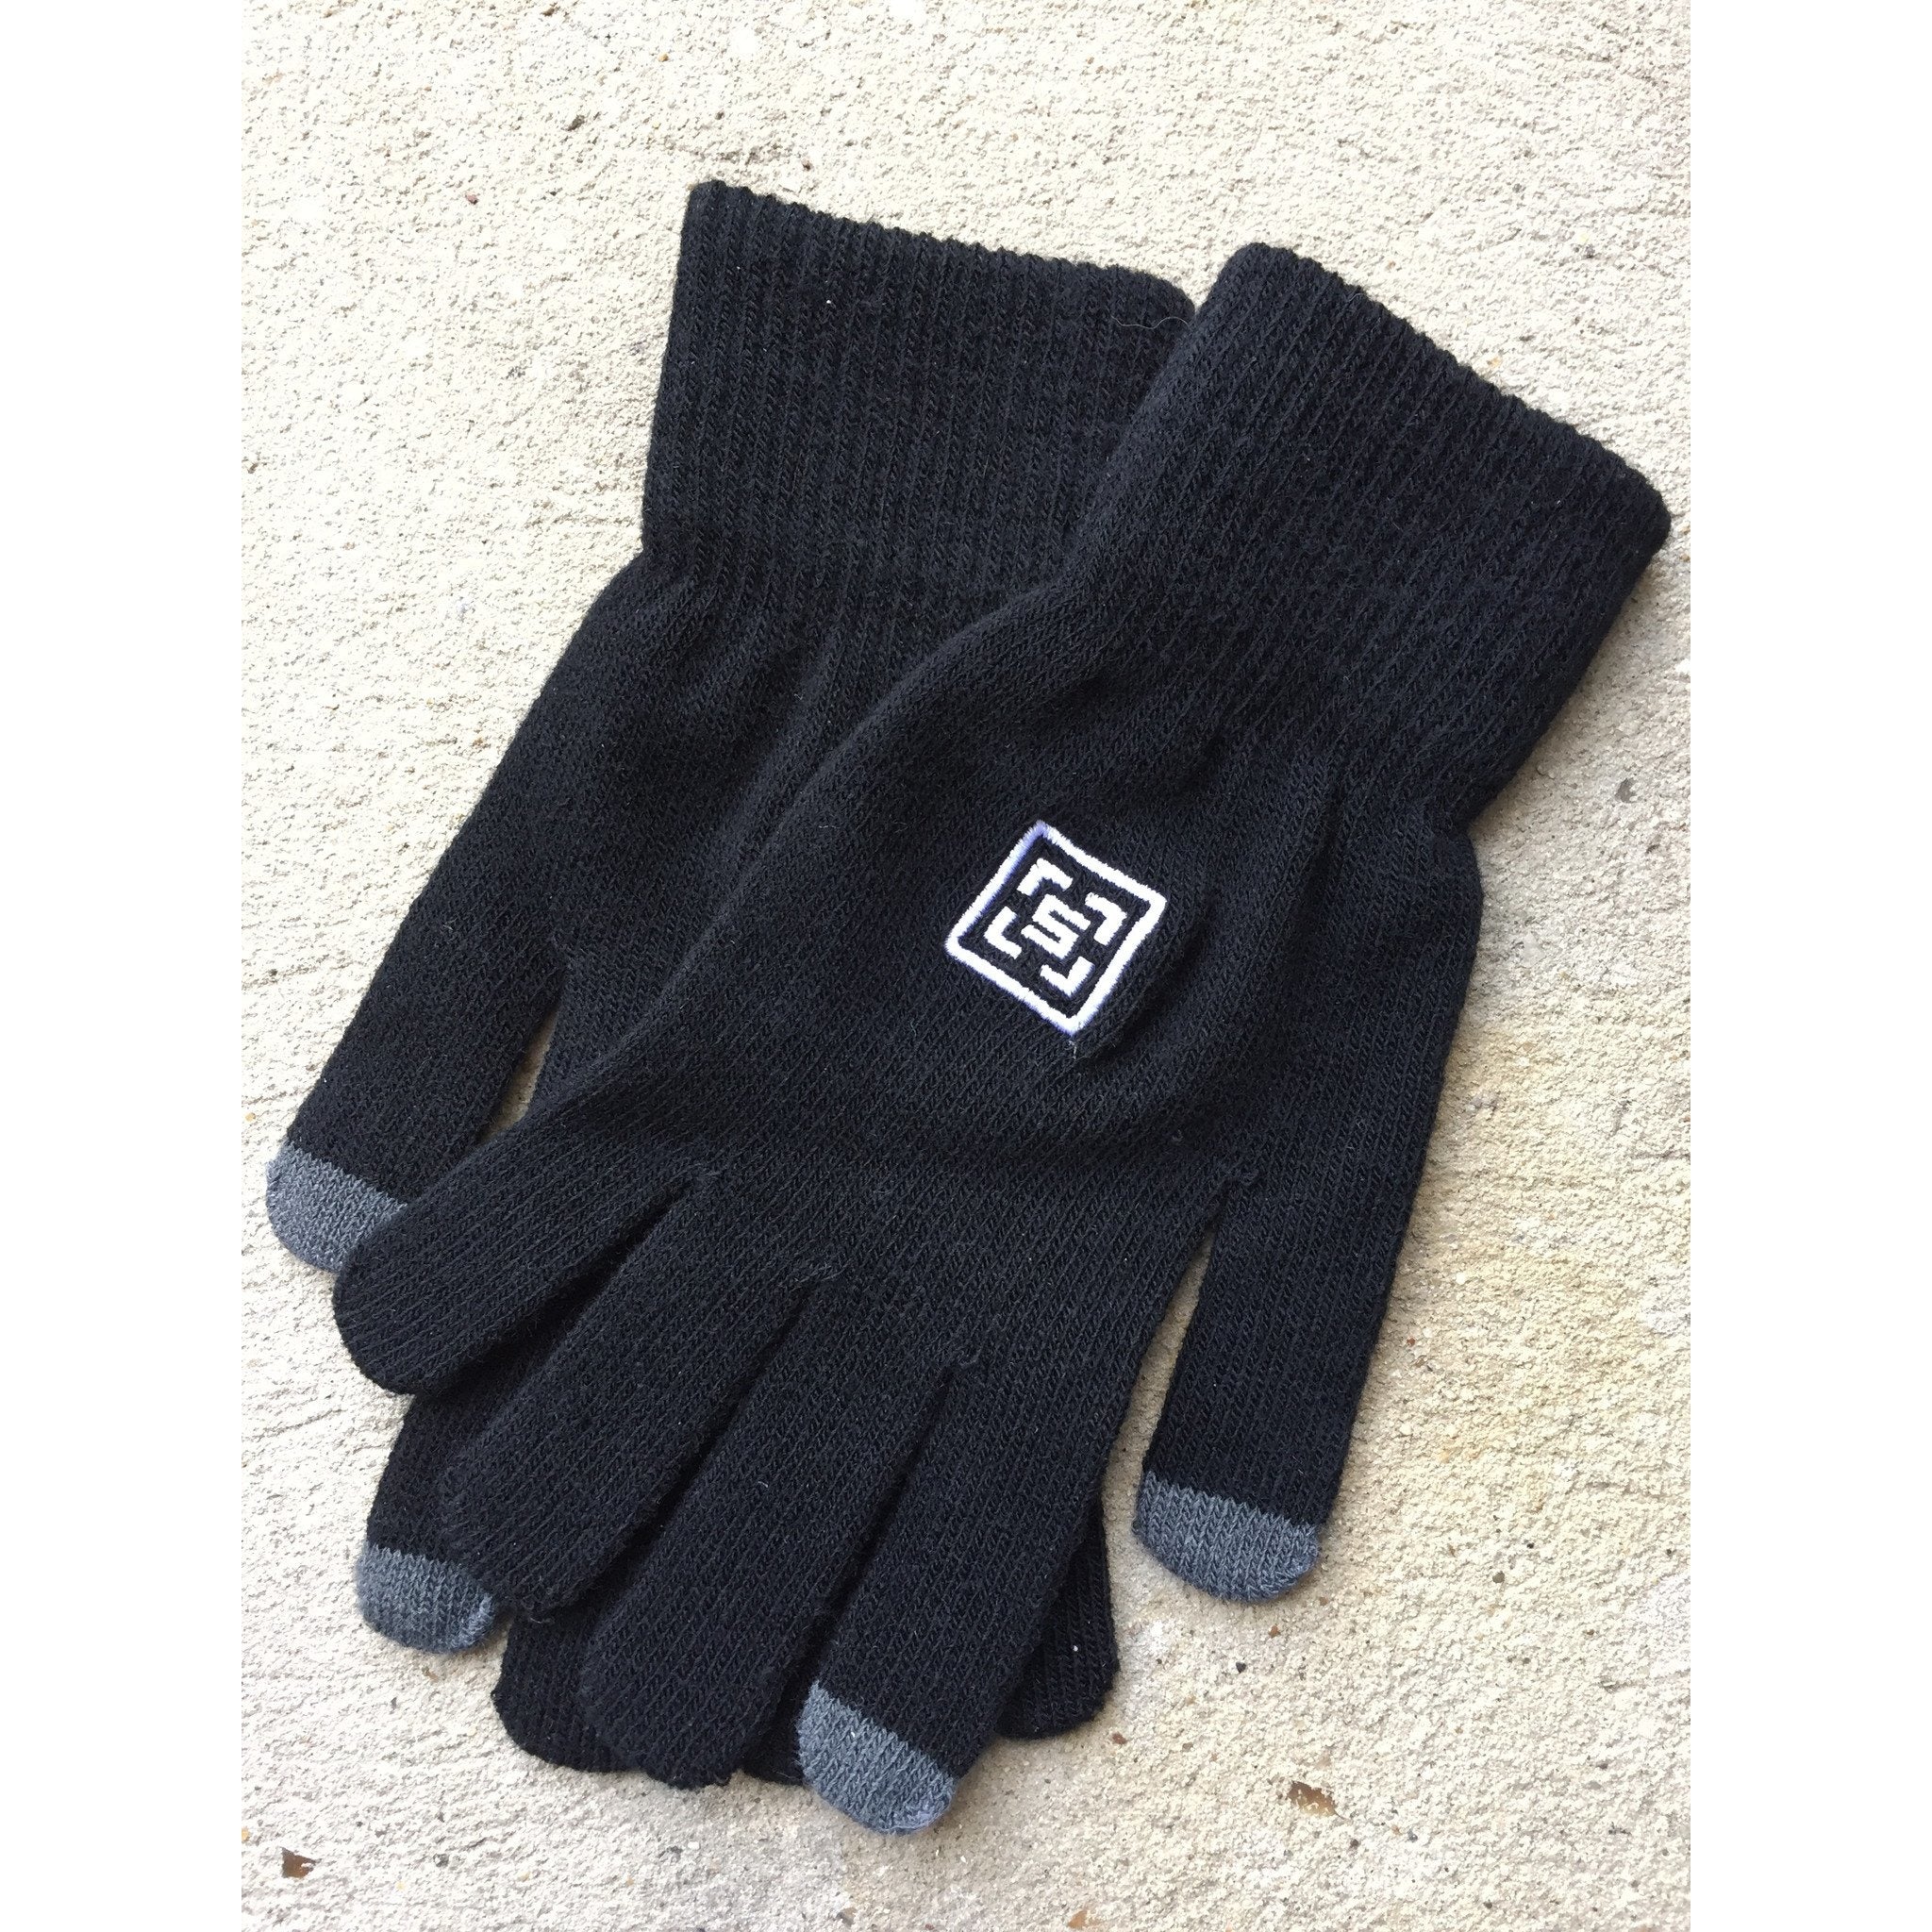 The Square Black Gloves